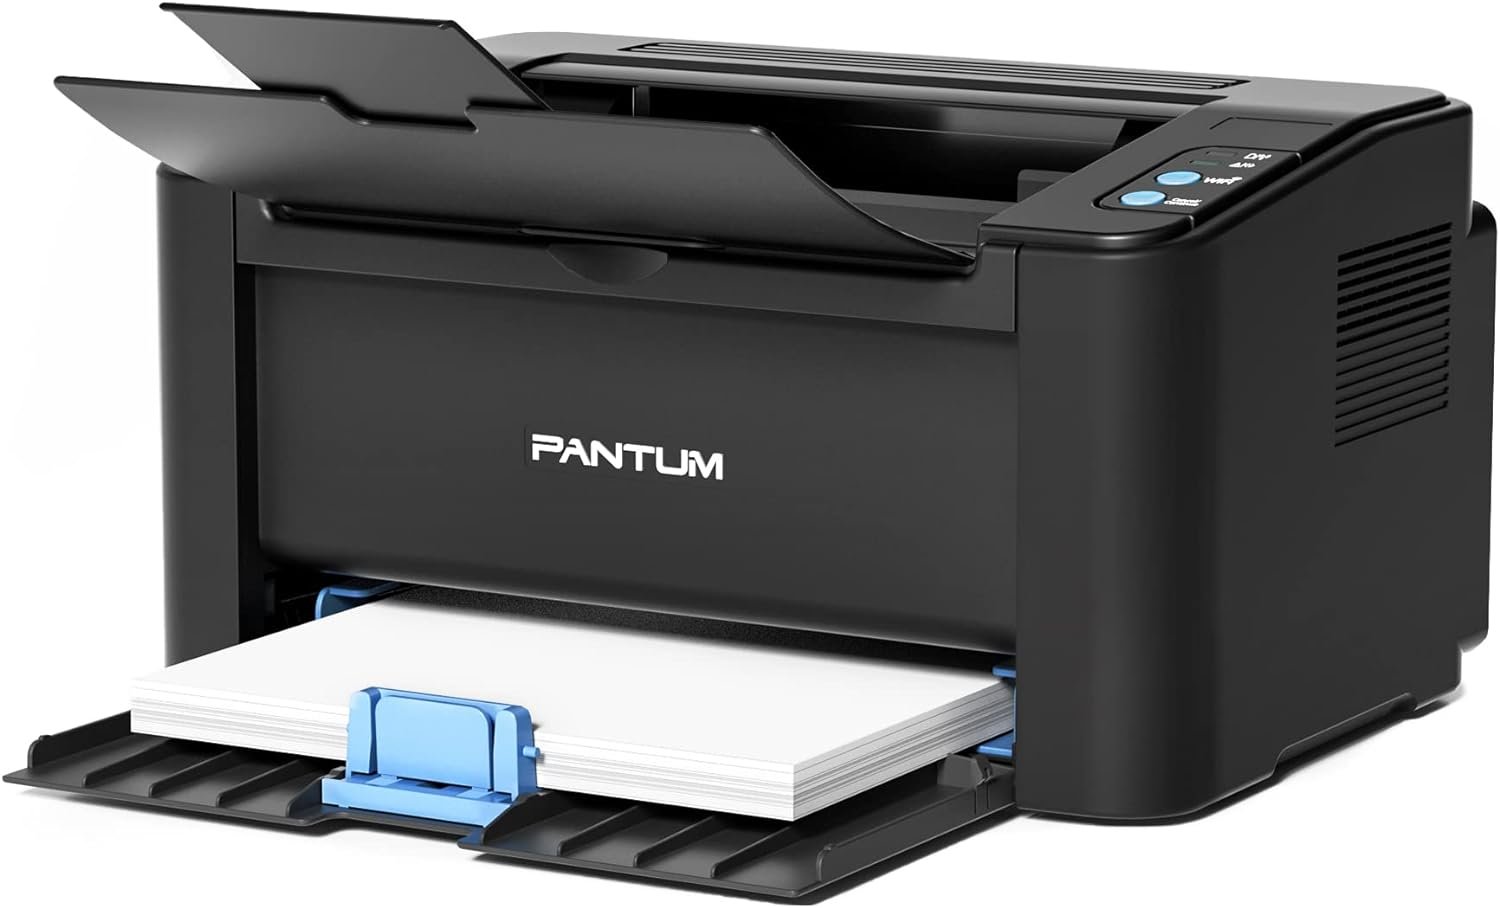 Pantum Laser Printer Black and White, Wireless Printer